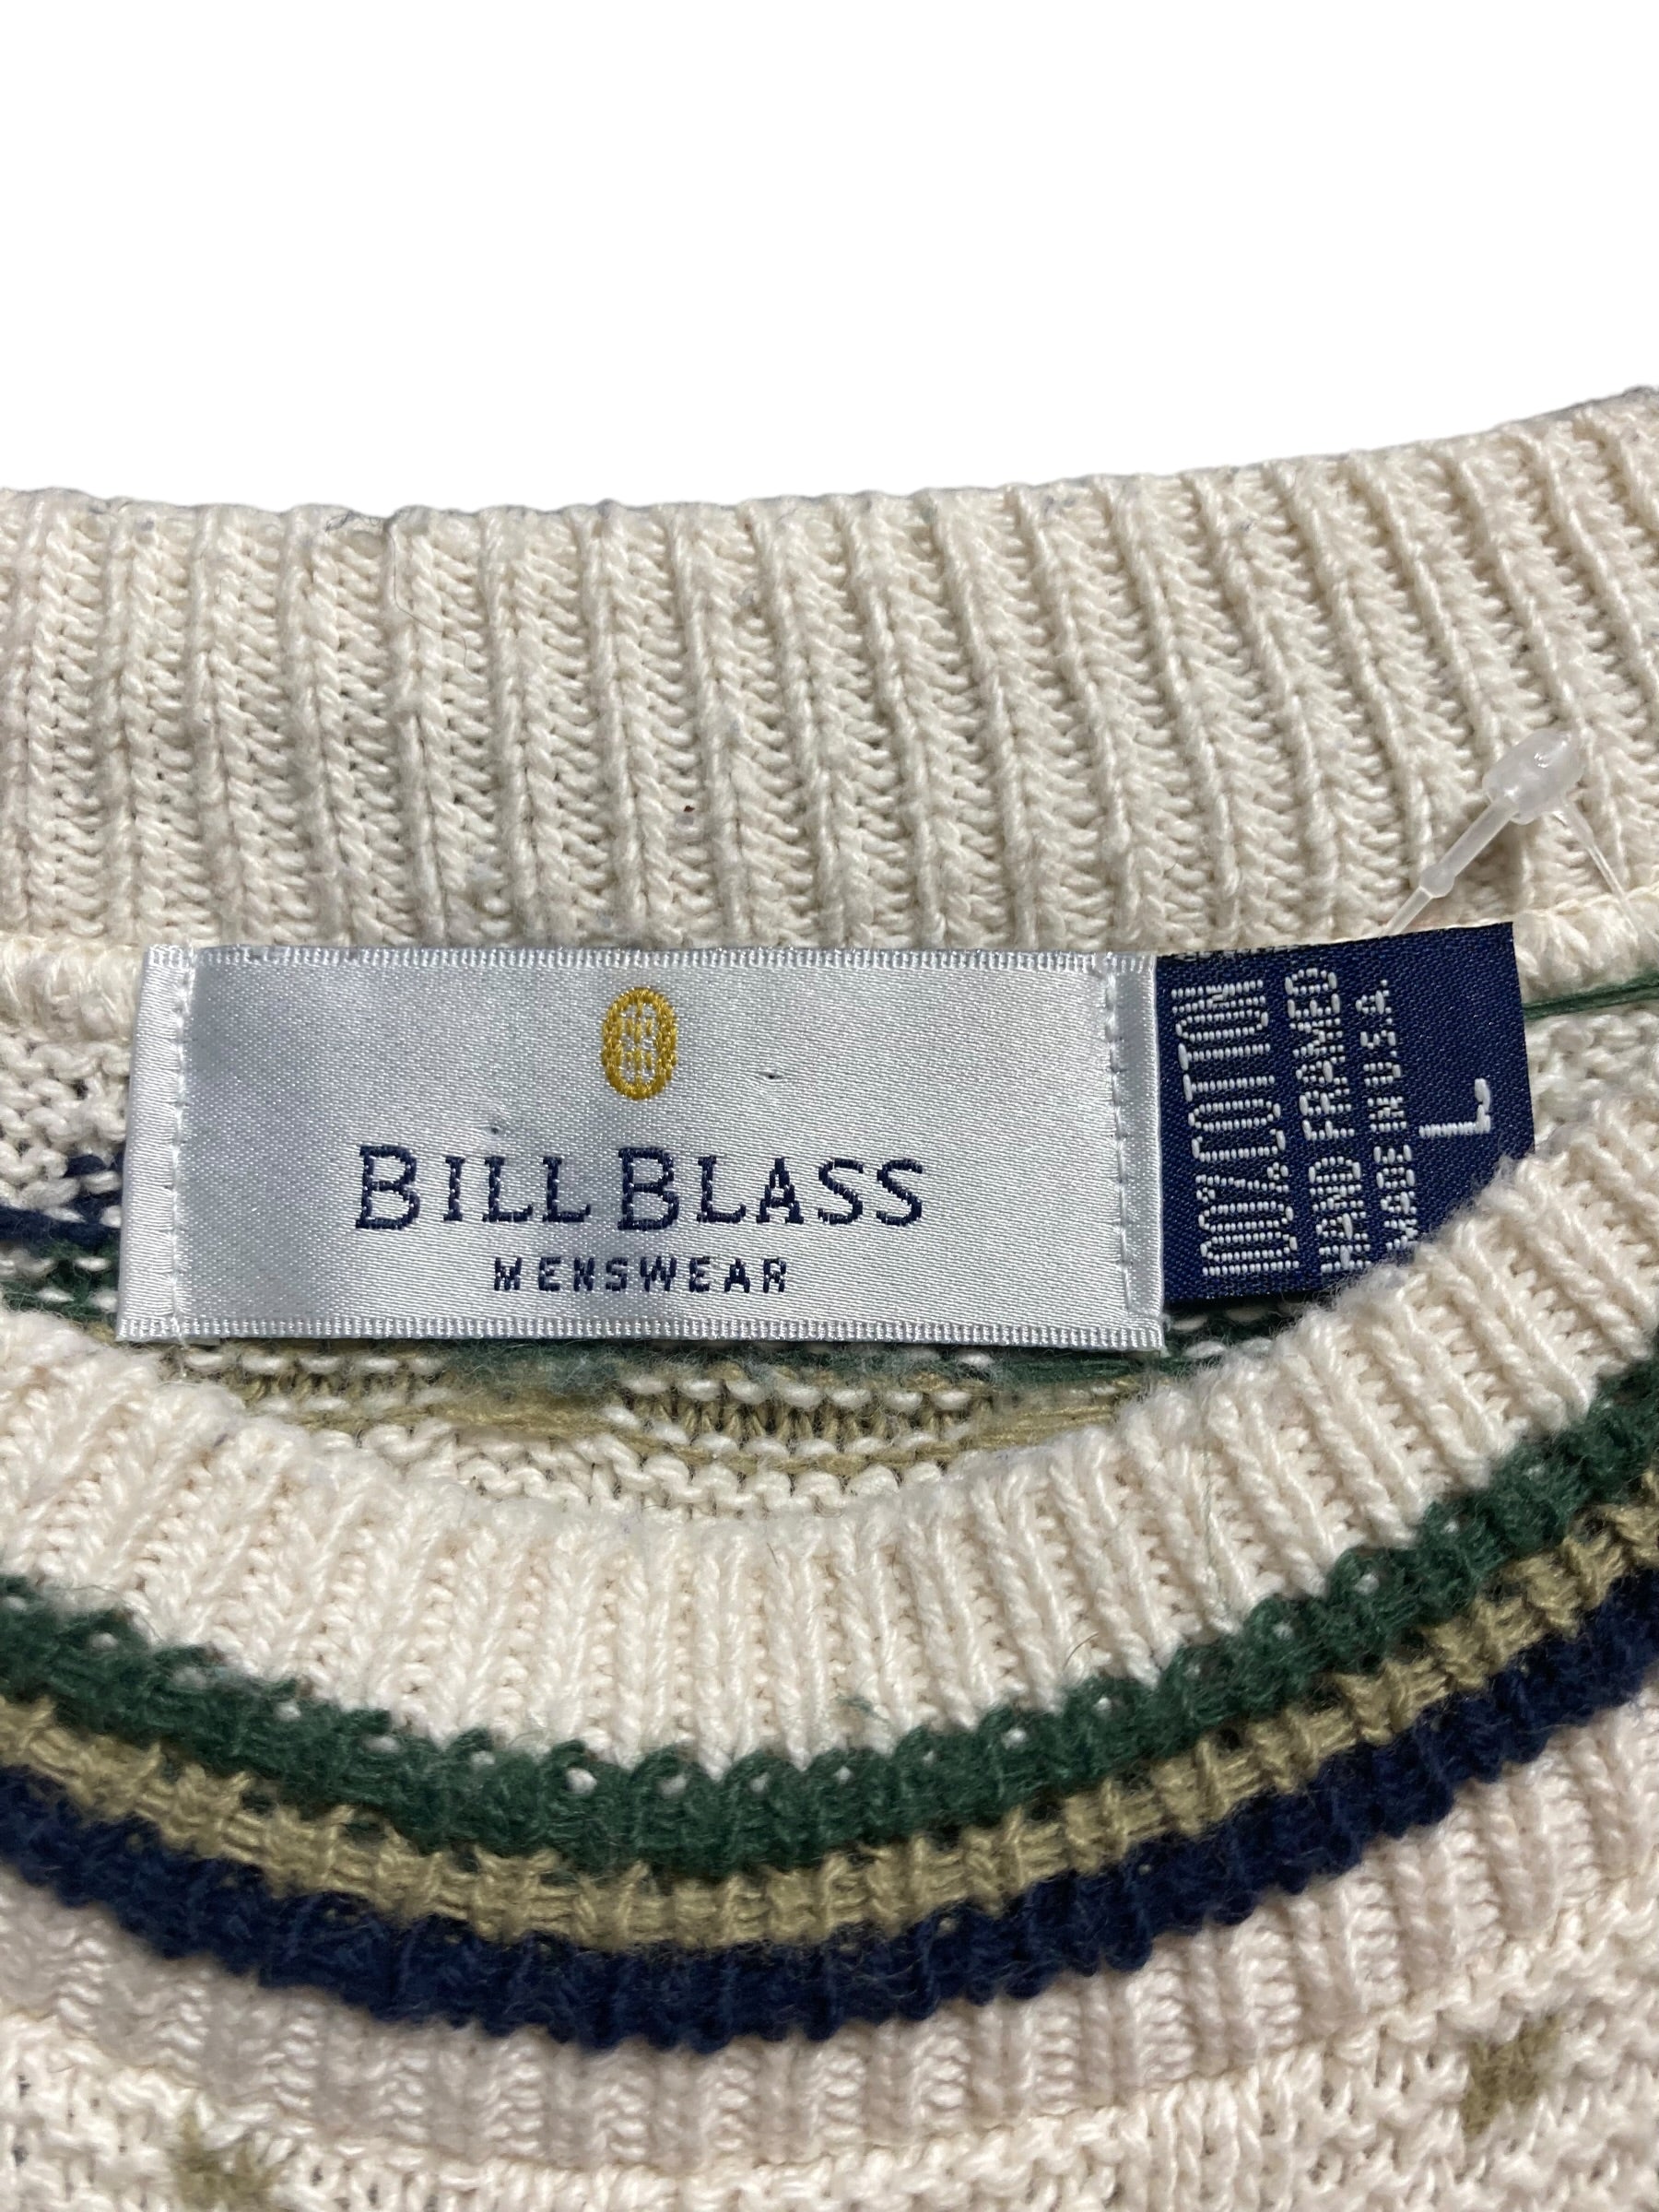 BILL BLASS knit sweater ニット セーター デザイン – STORAGE UNLIMITED